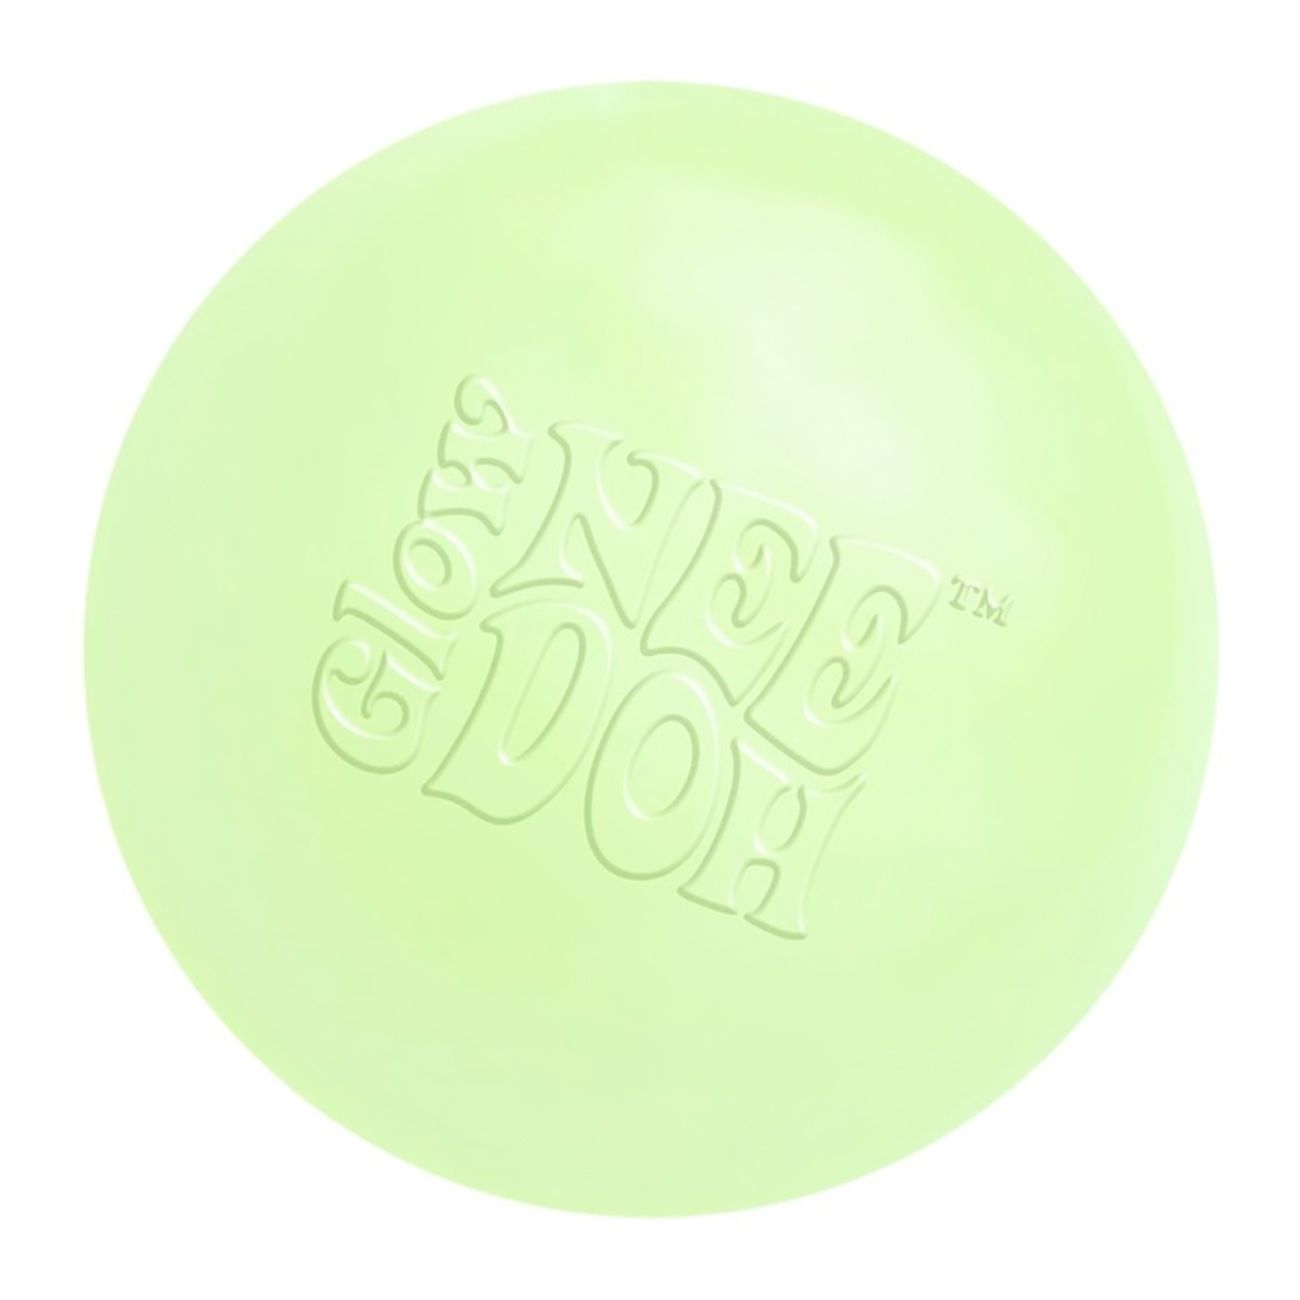 needoh-squeeze-ball-glow-in-the-dark-87168-1